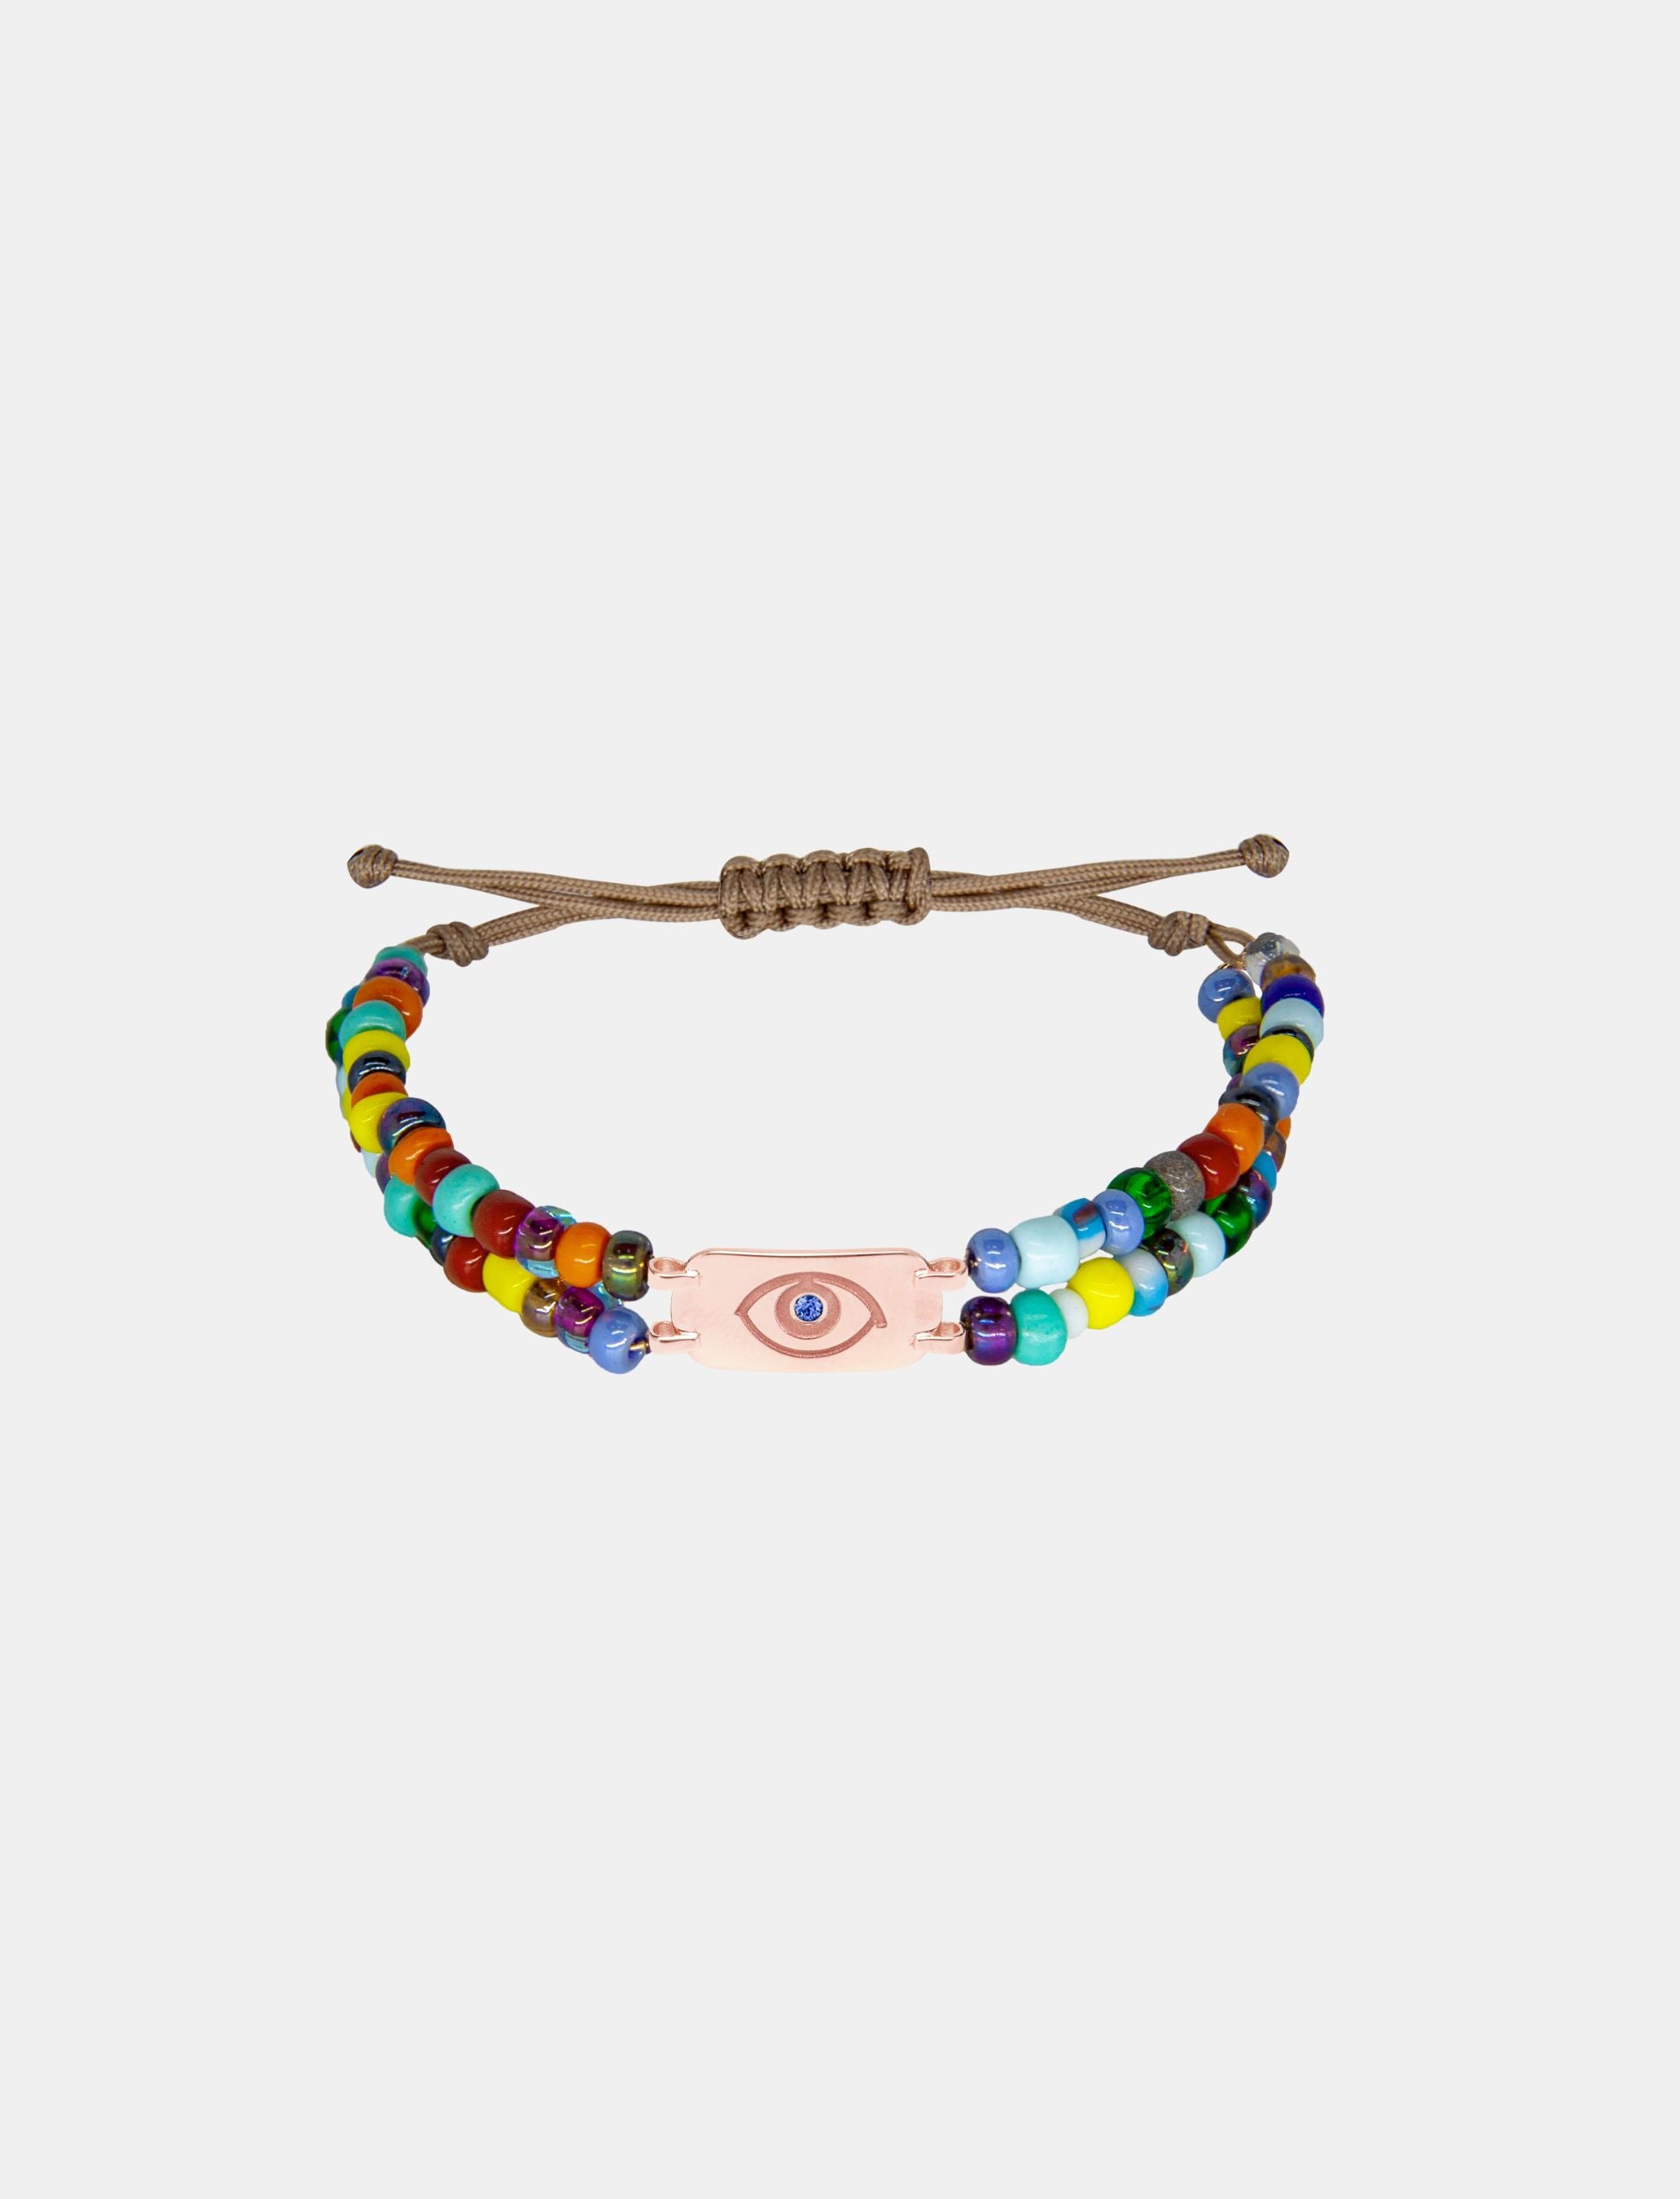 DK x SK Rainbow Double Strand Bracelet with Blue Sapphire Eye